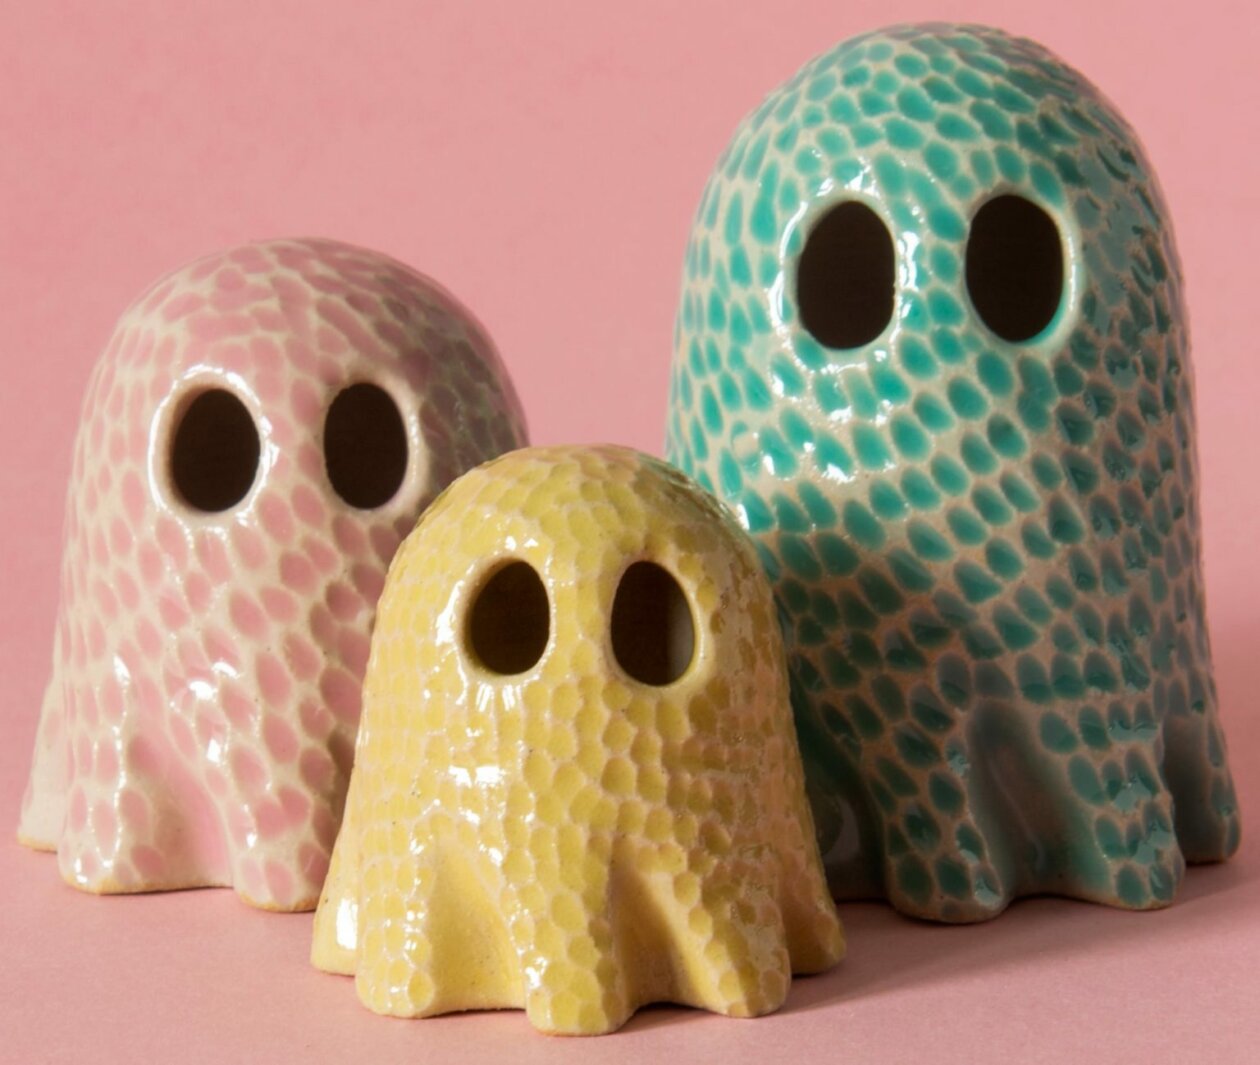 Fun Tiny Ceramic Ghosts By Lisa Agnetun (4)